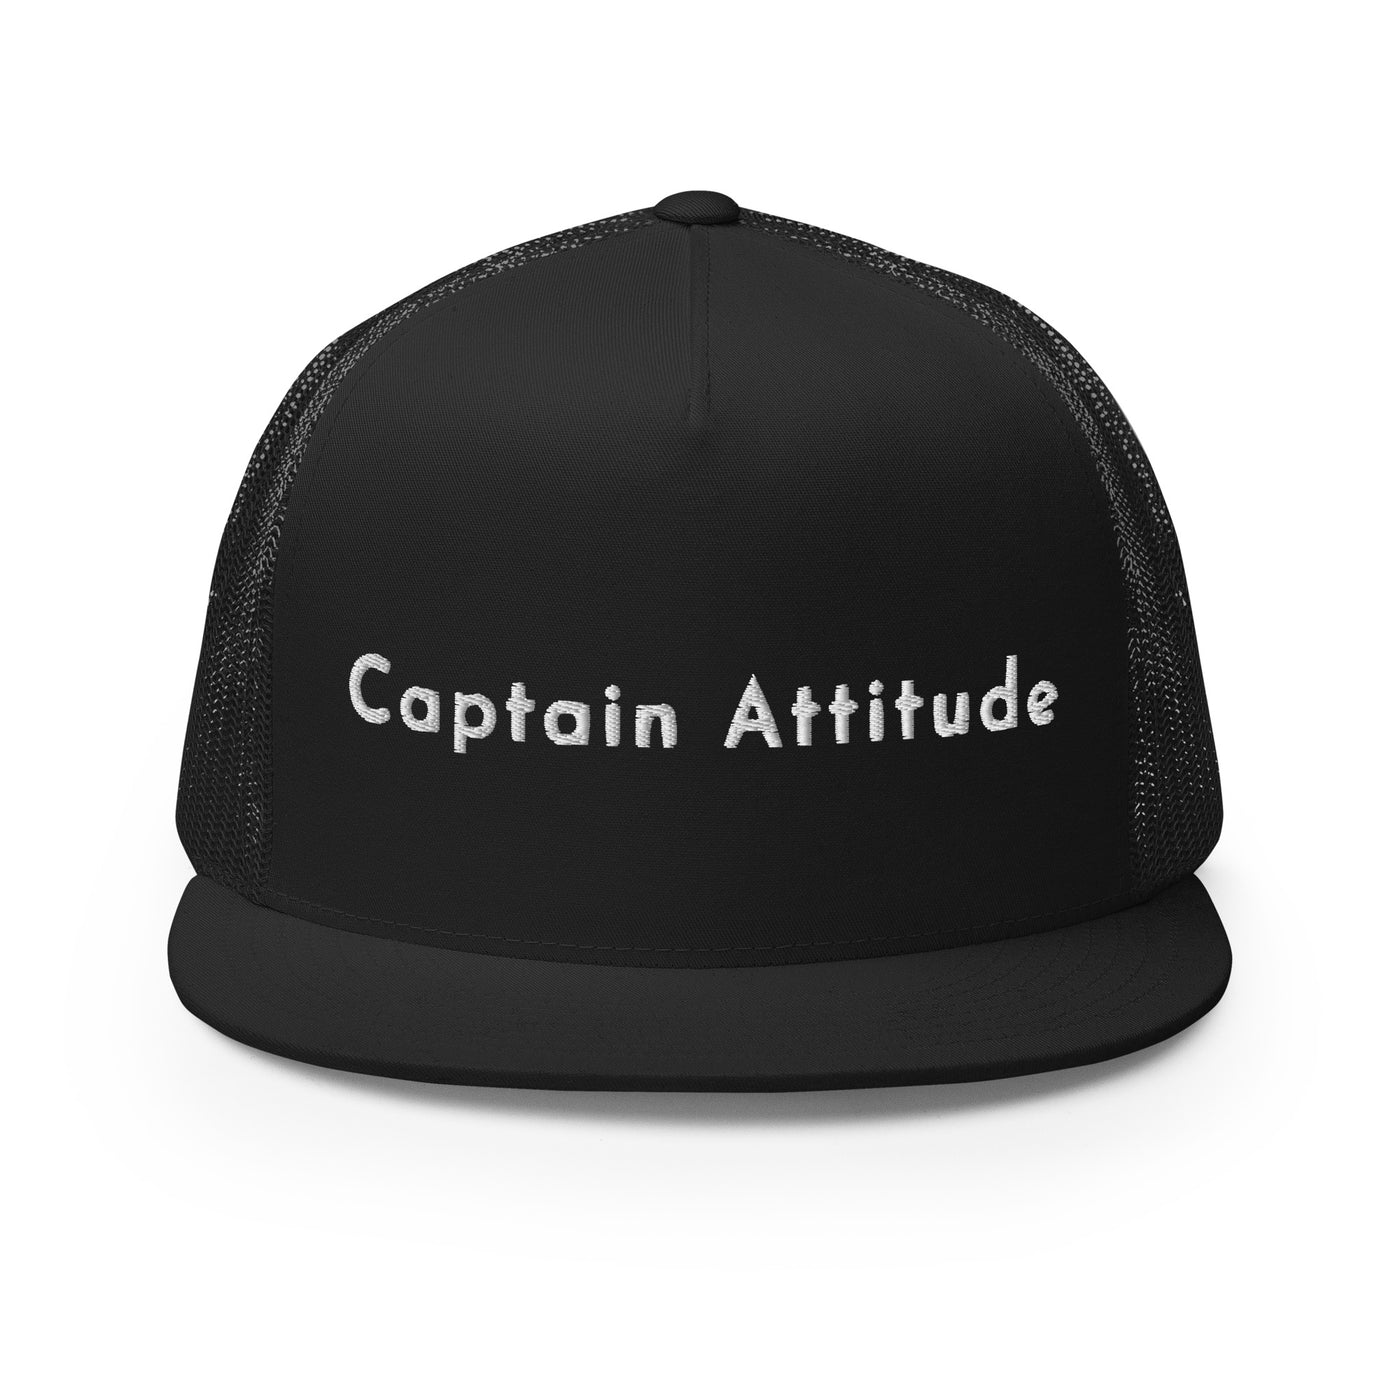 Captain Attitude Trucker Cap Flach